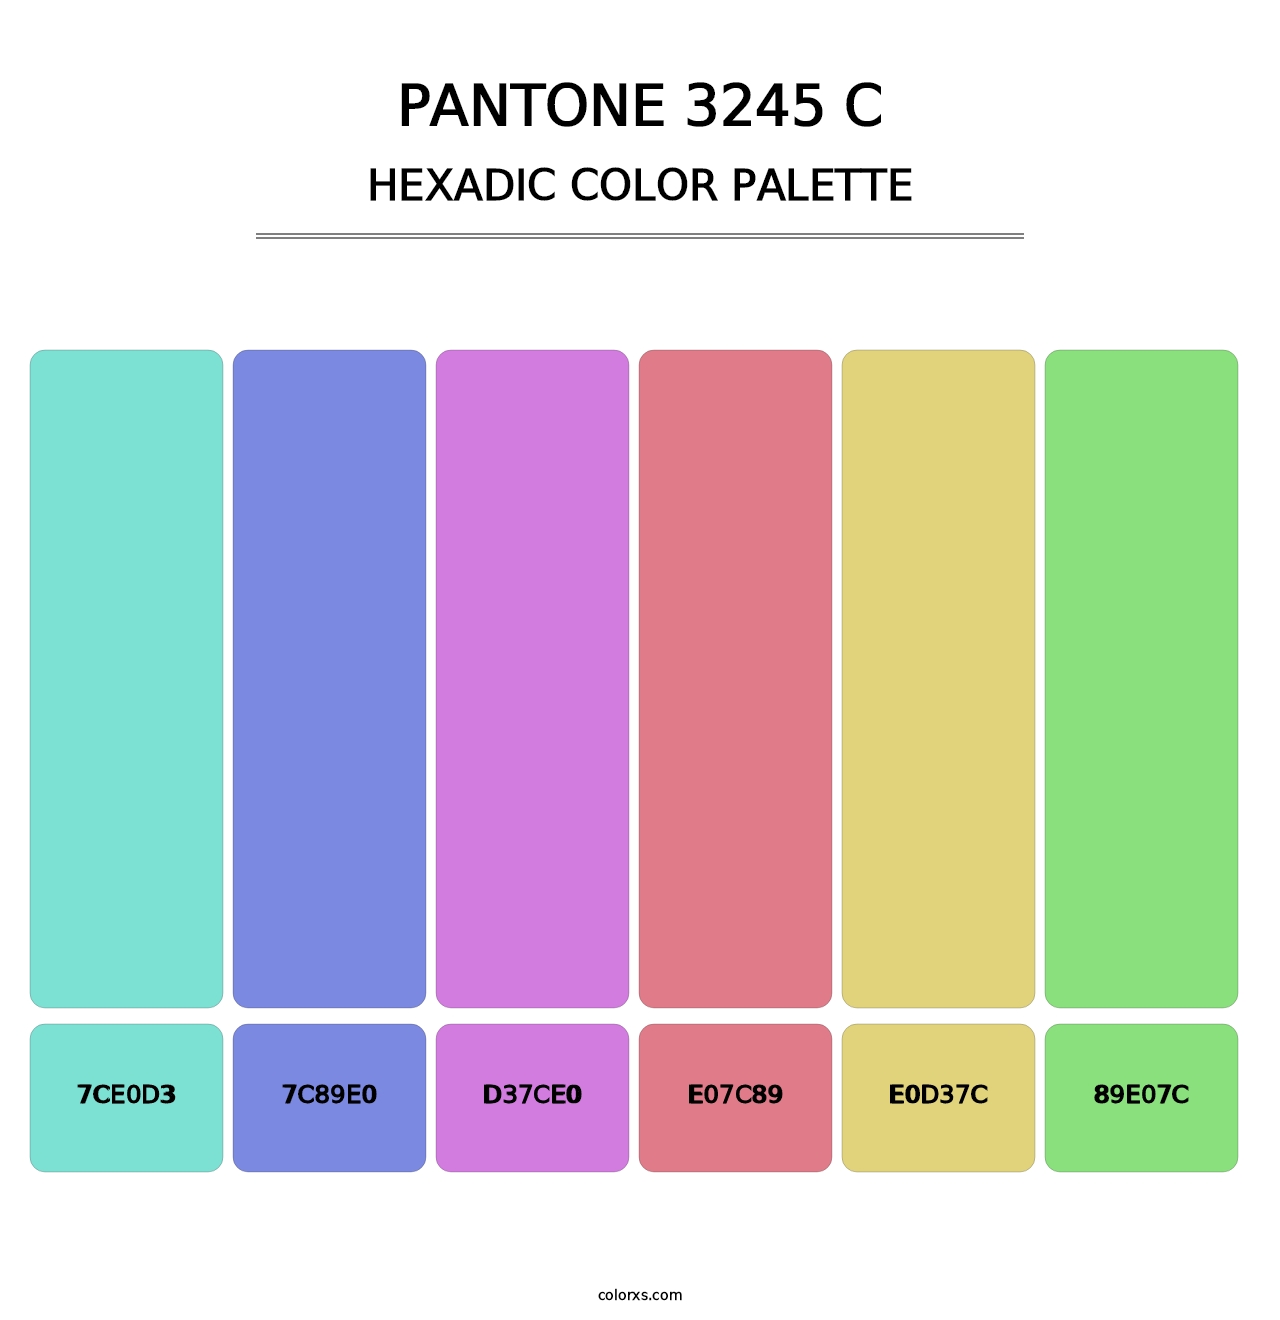 PANTONE 3245 C - Hexadic Color Palette